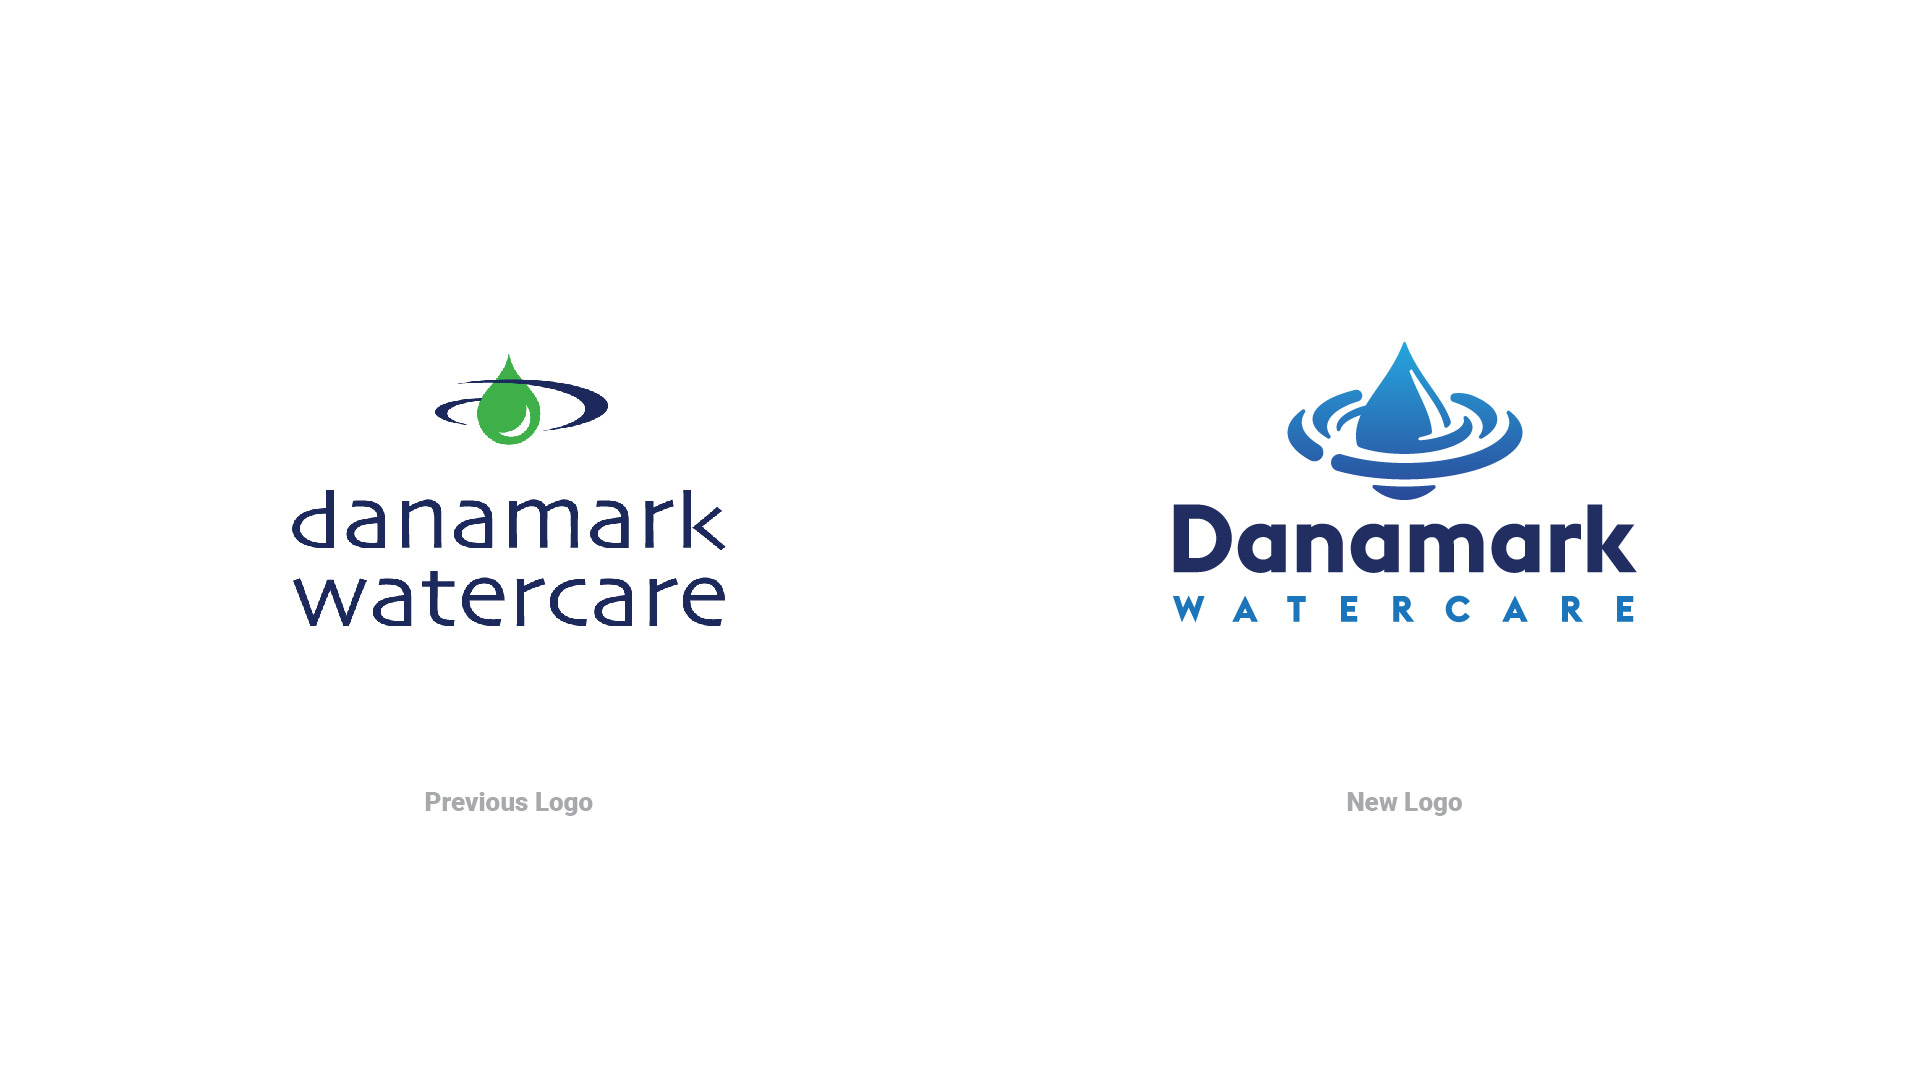 danamark watercare old logo and new logo